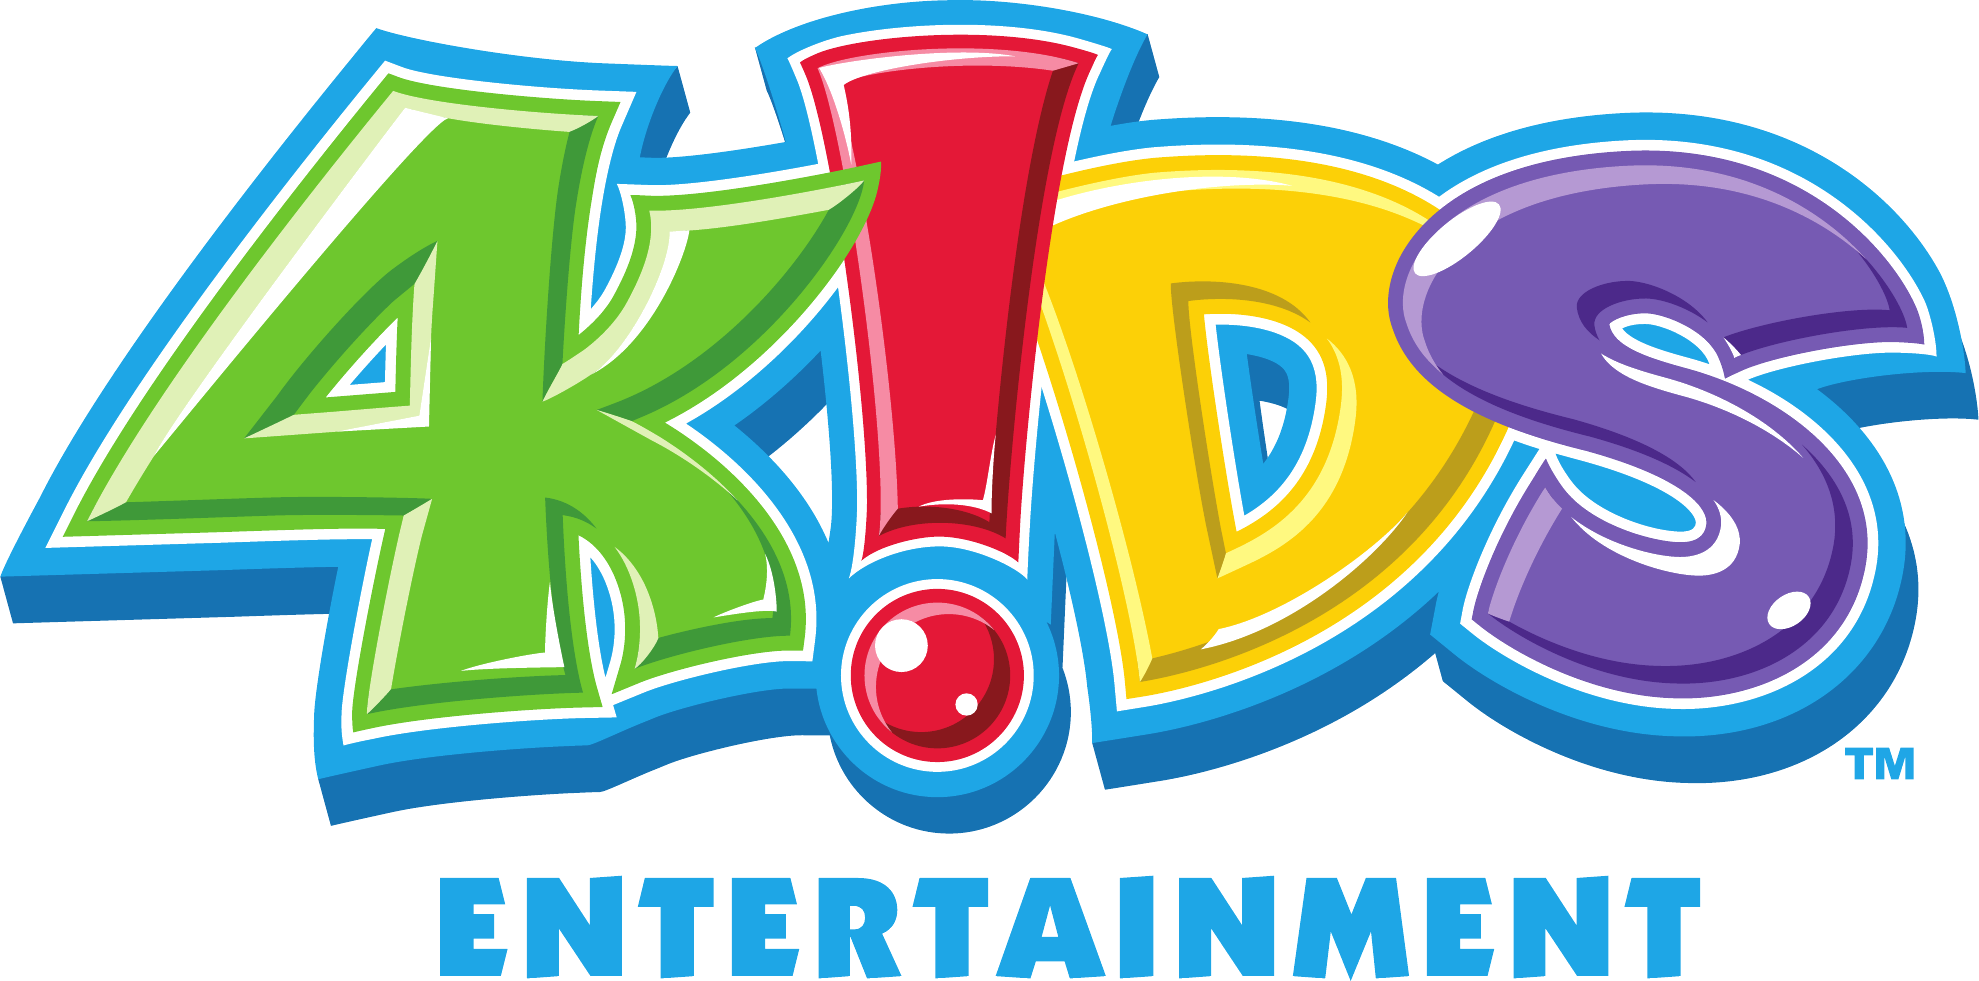 4kids логотип. Детские логотипы. Логотипы детских игр. Детский логотип игра.